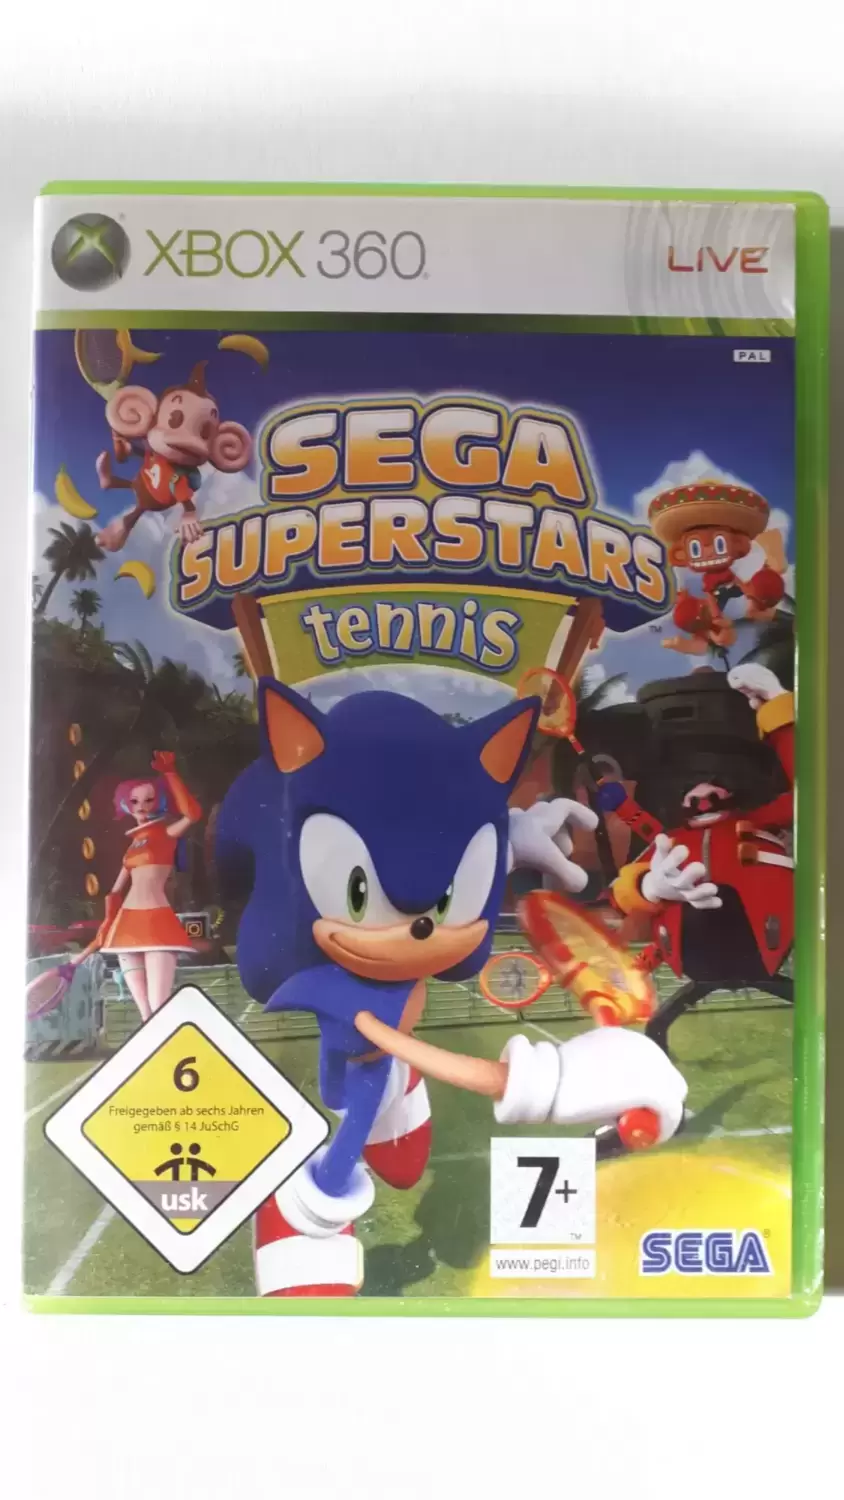 XBOX 360 Games - Sega Superstar Tennis